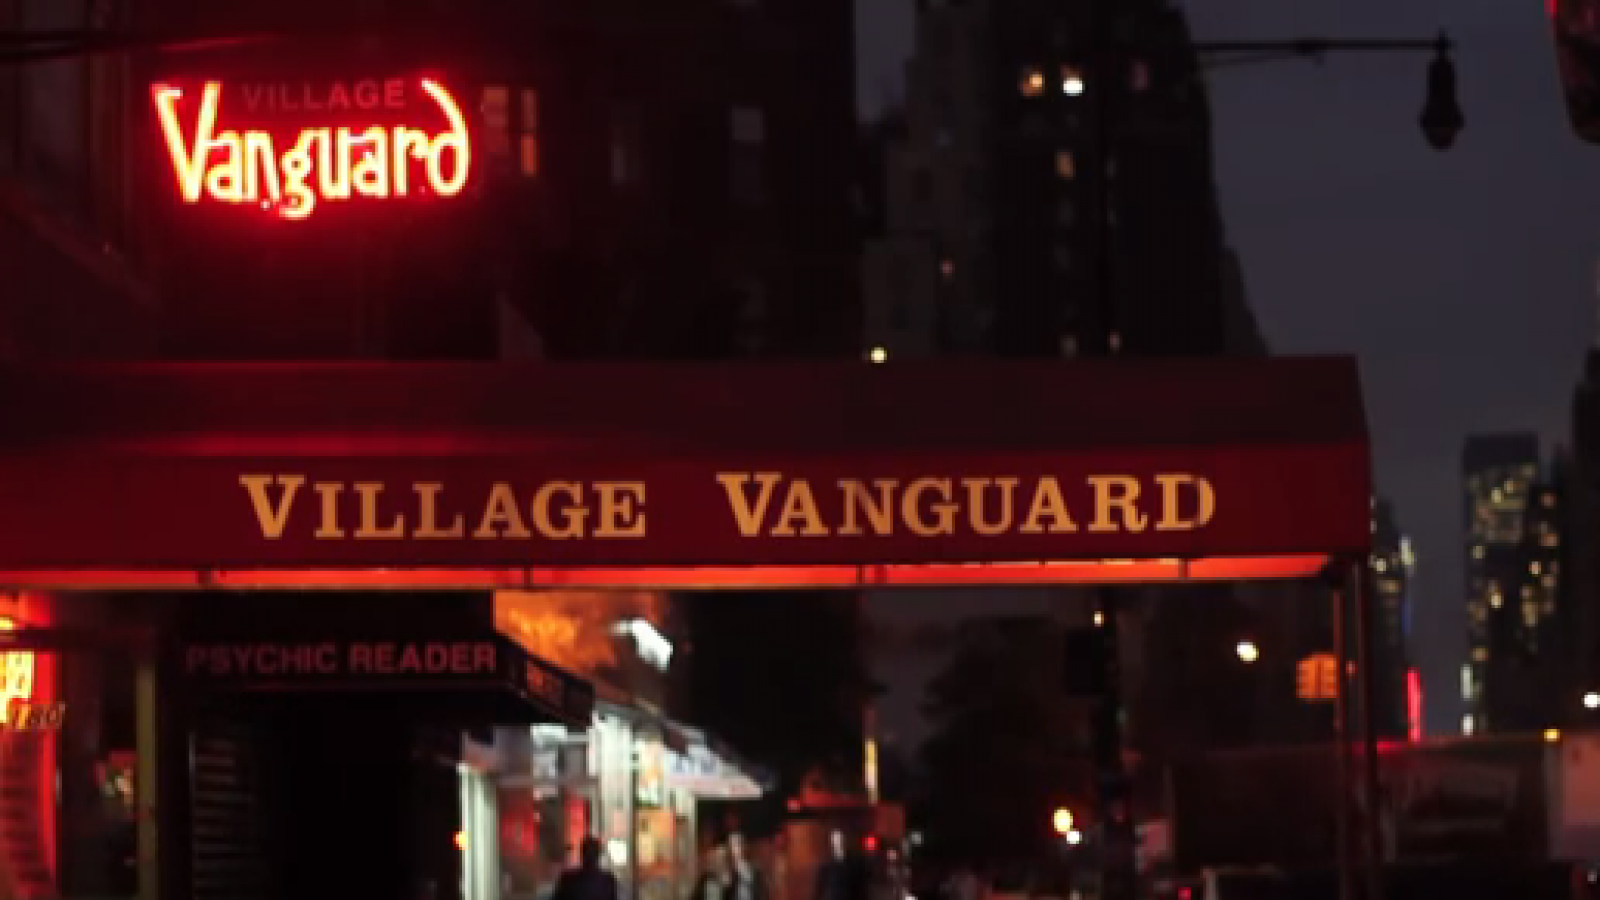 Outdoor shot of the Village Vanguard at night